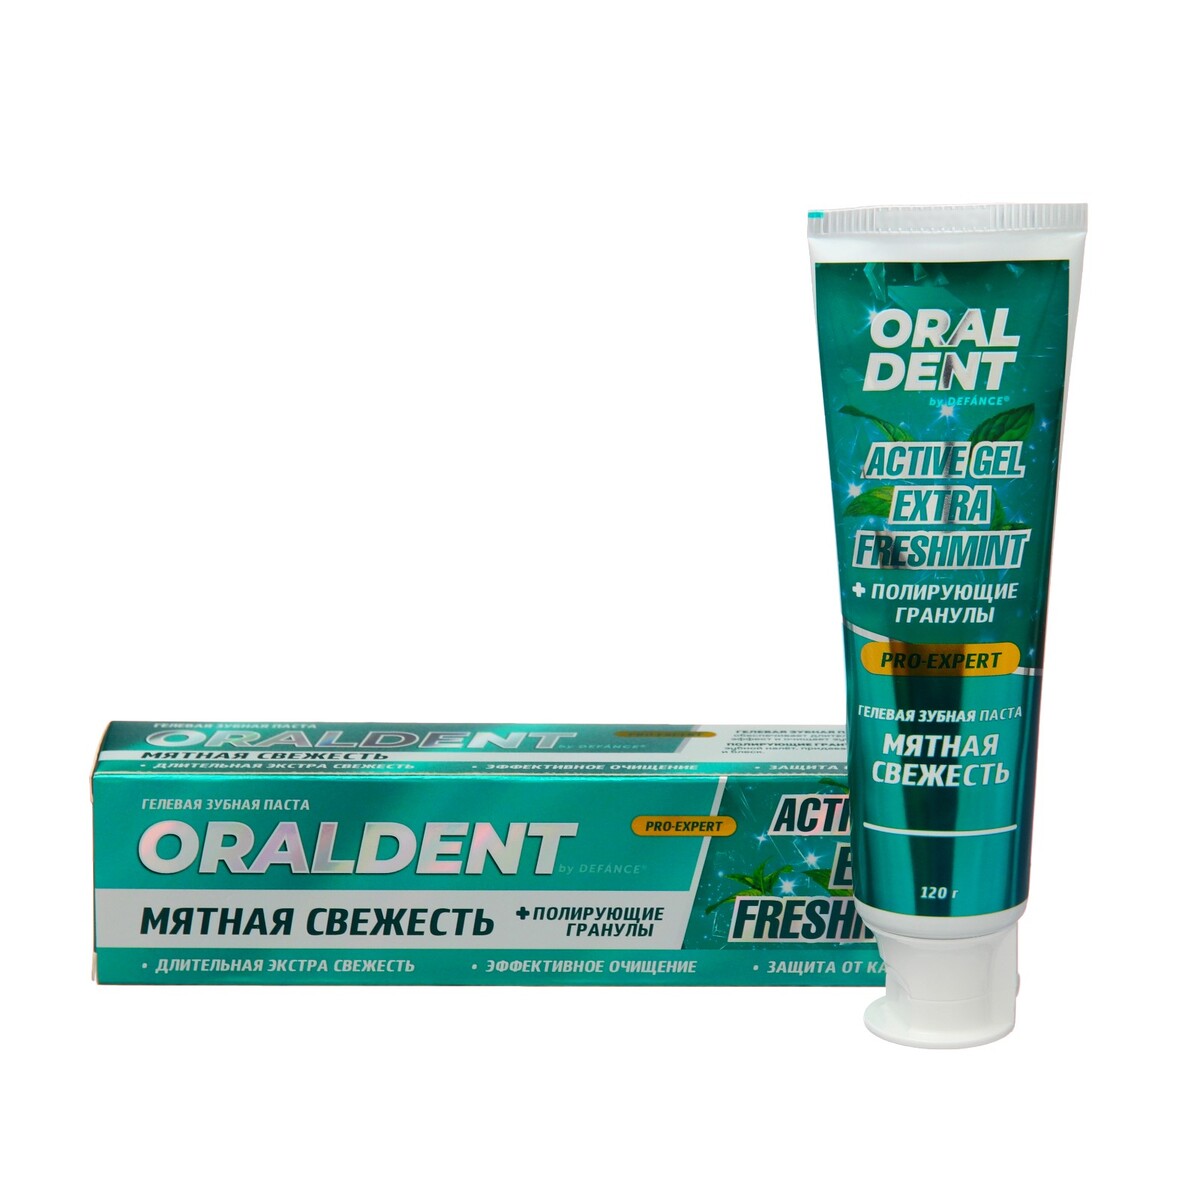   defance oraldent active gel extra freshmint, 120 